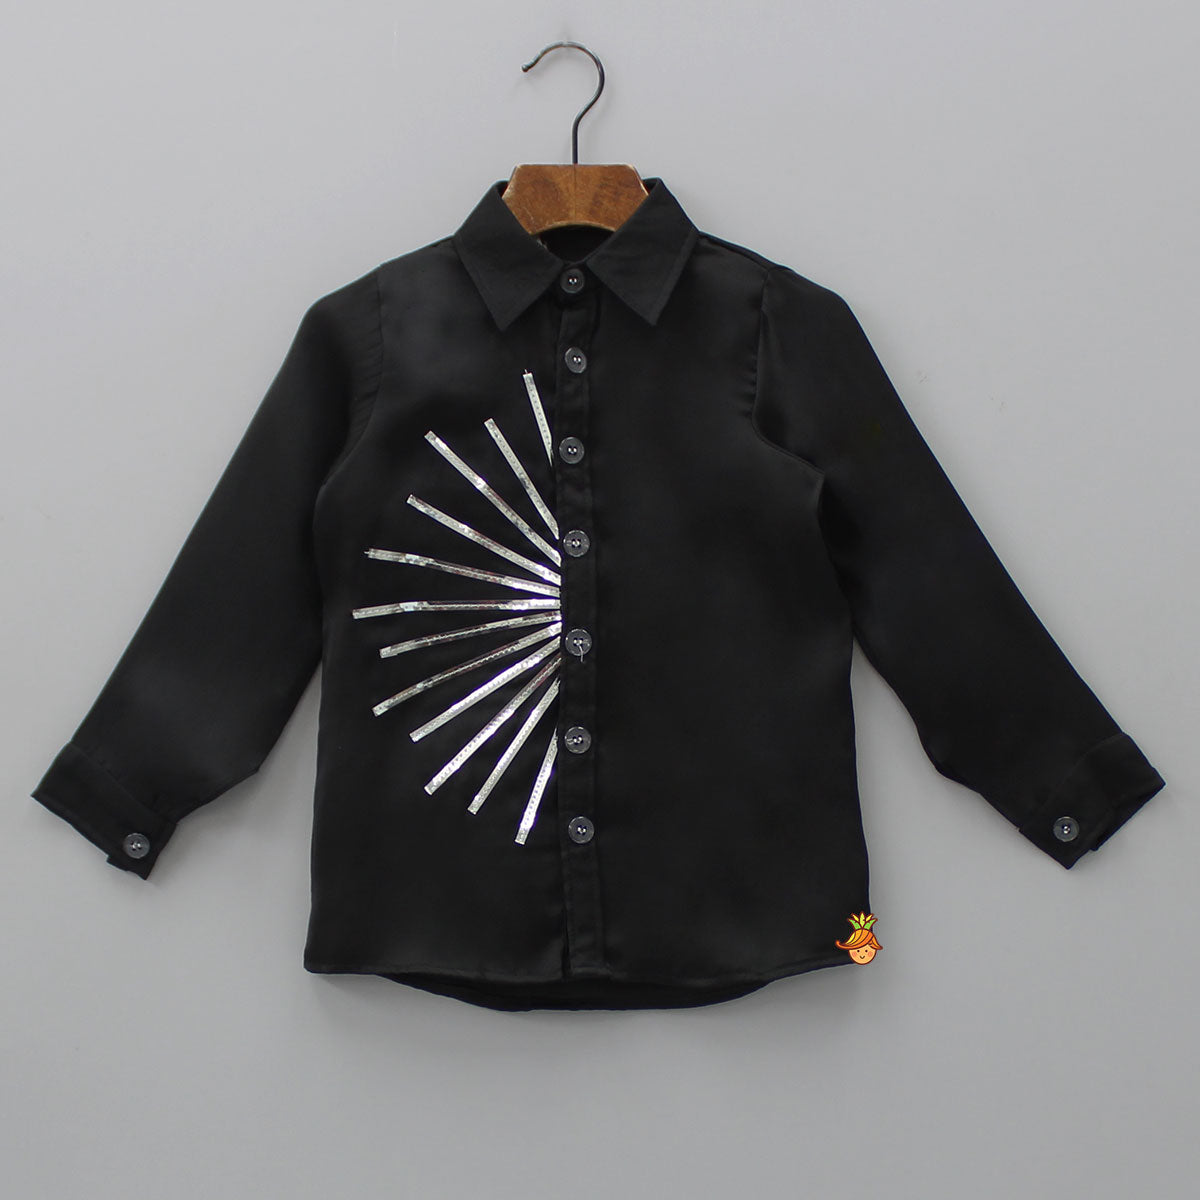 Collar Neck Stripes Detailed Black Shirt